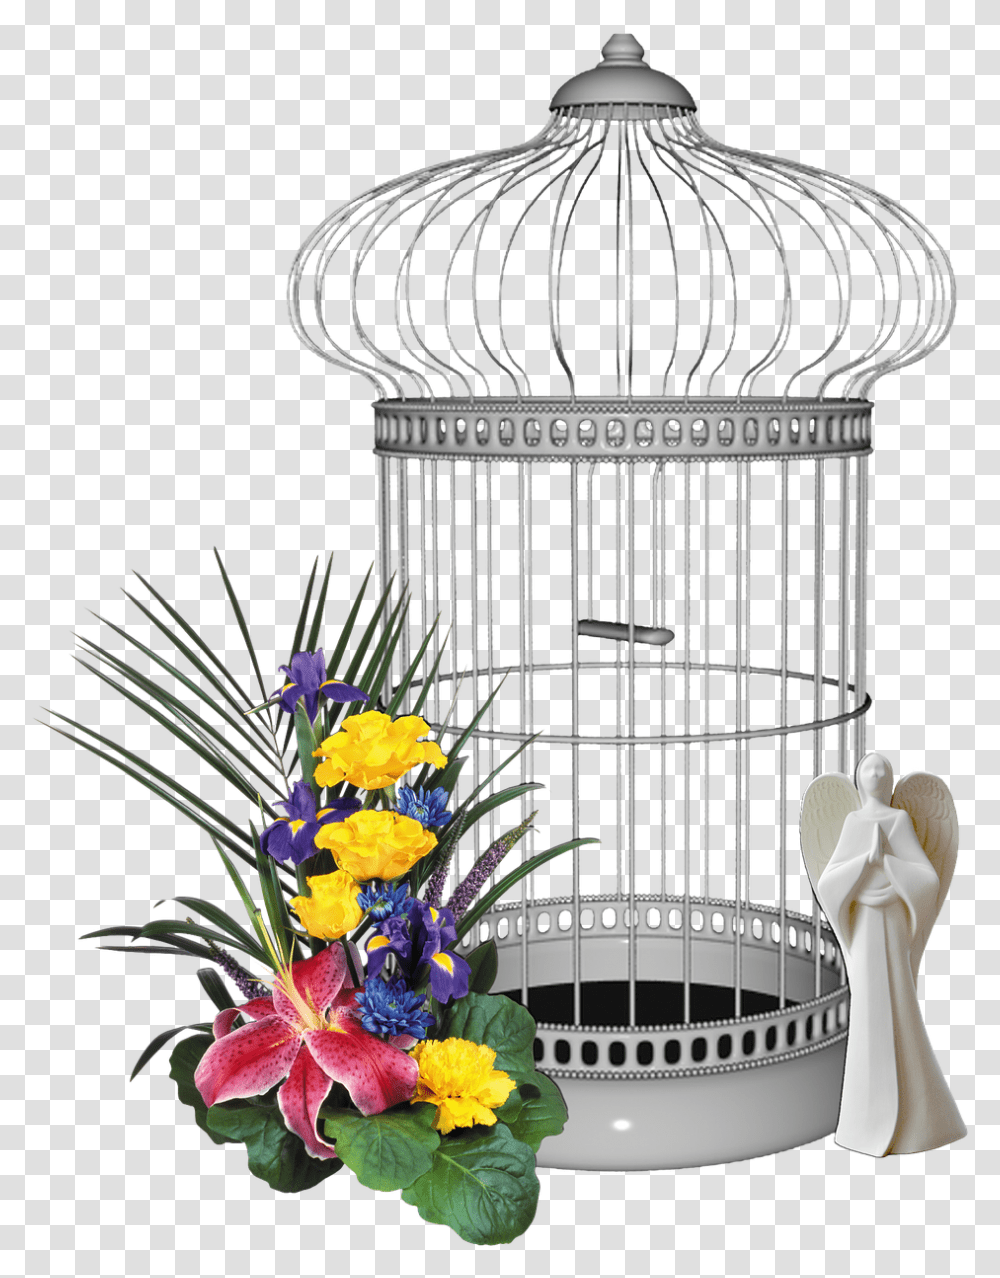 Bird Cage Yellow Flower Free Image On Pixabay Flower, Plant, Ikebana, Art, Vase Transparent Png